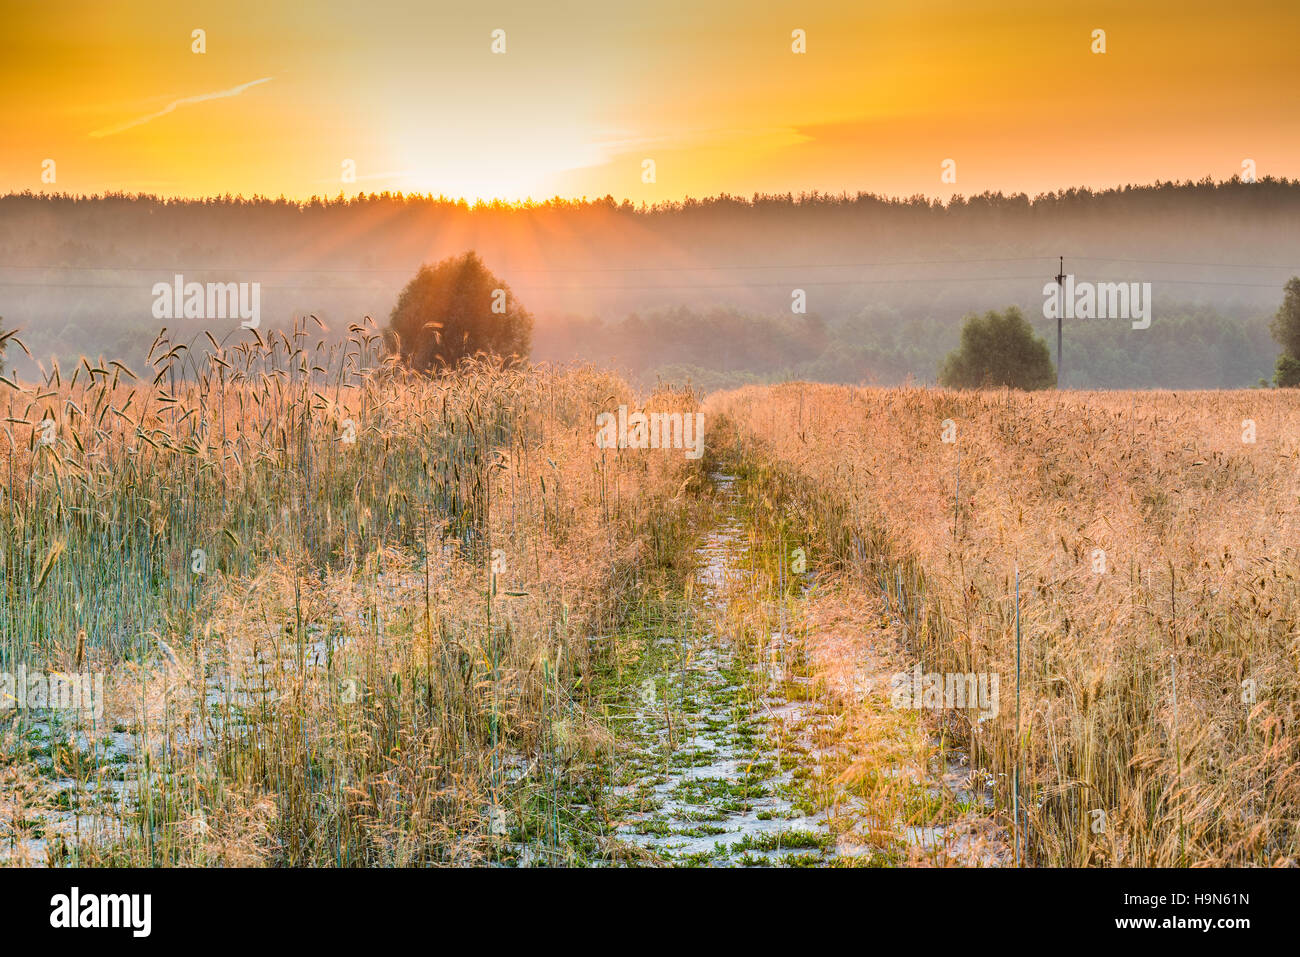 Dawn in a wheat field. Stock Photo